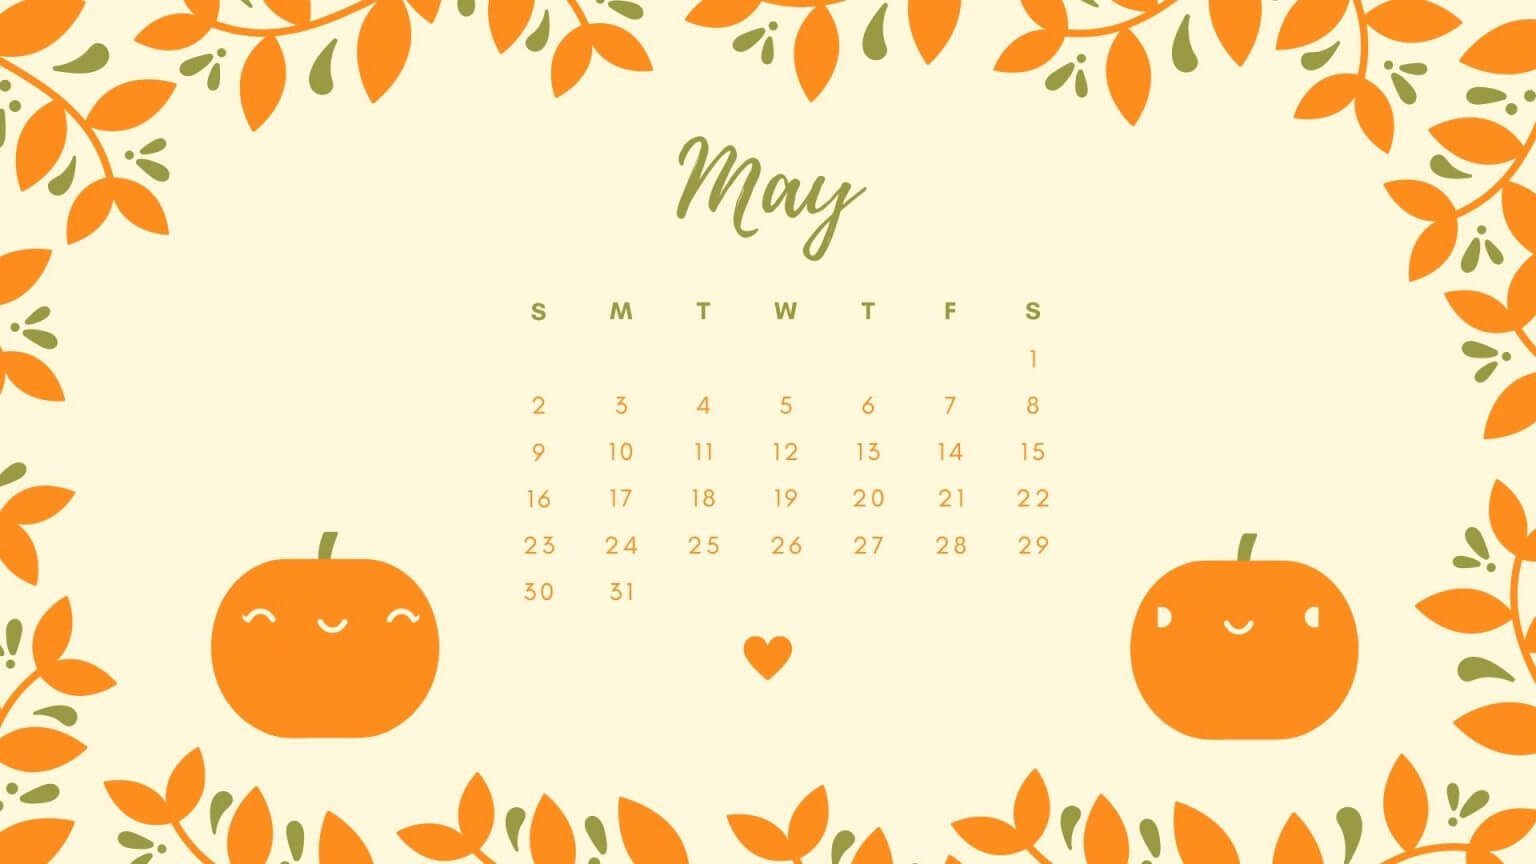 May 2021 Desktop Calendar Background